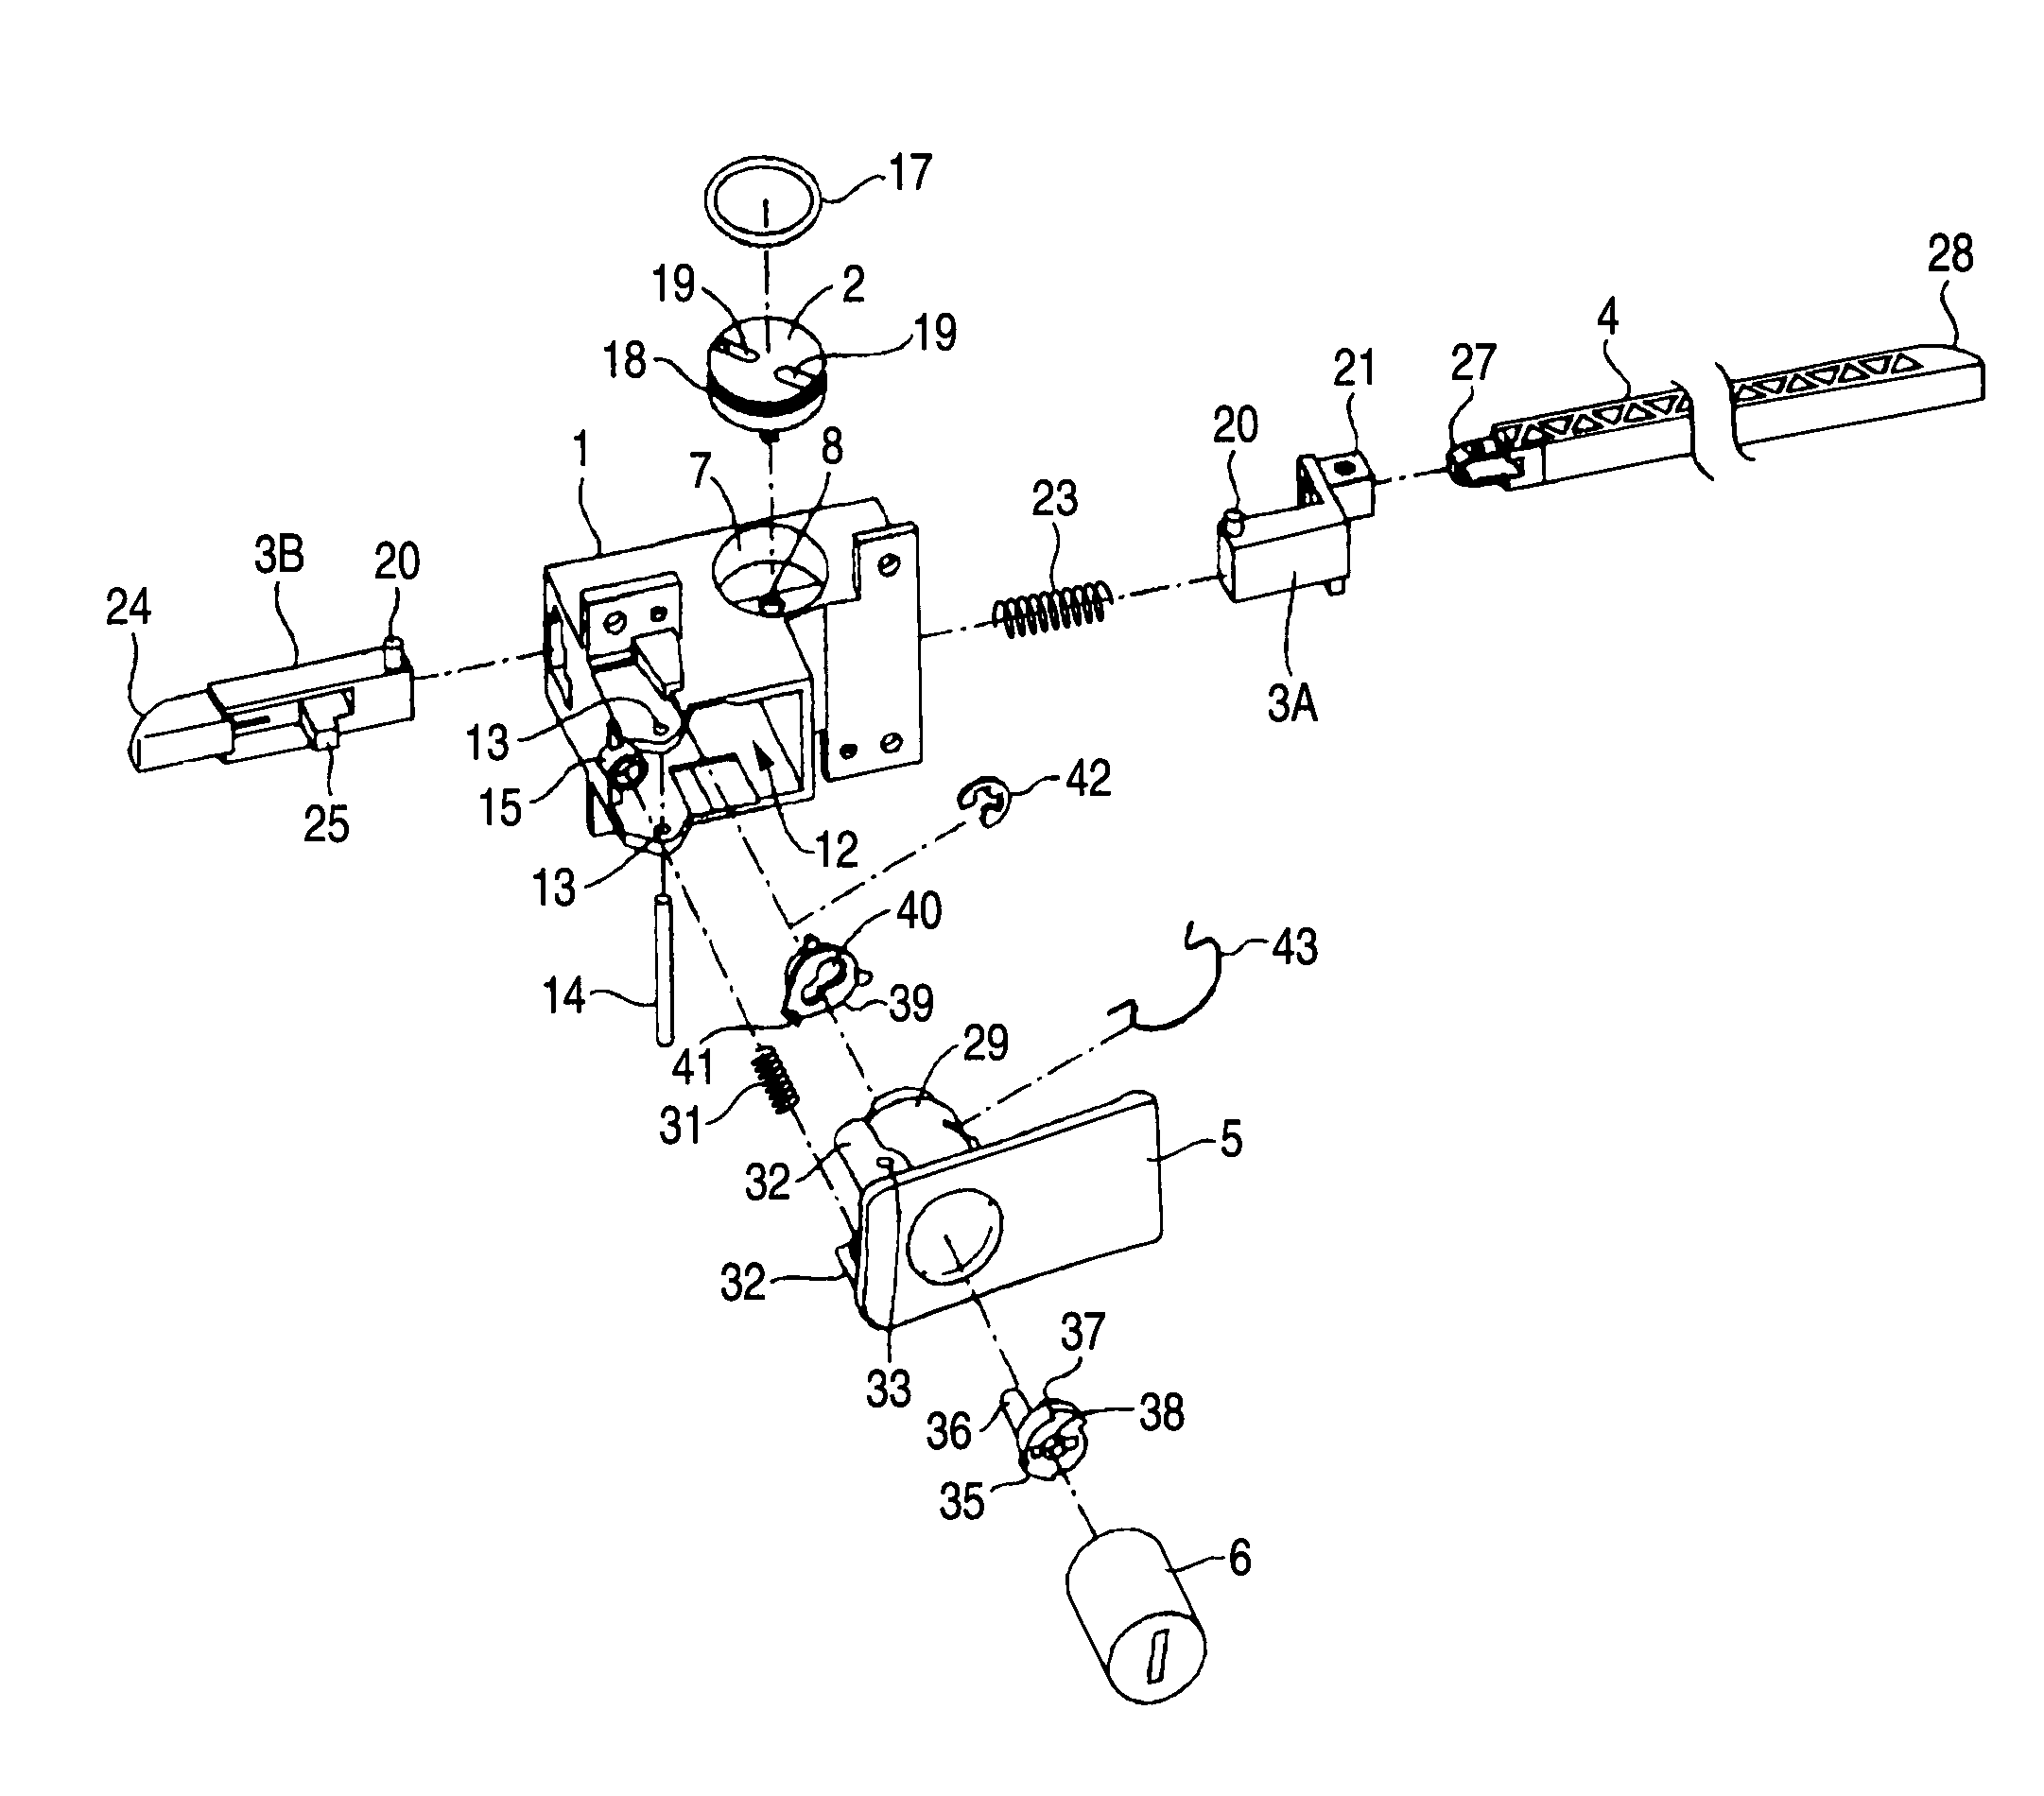 Side lock apparatus